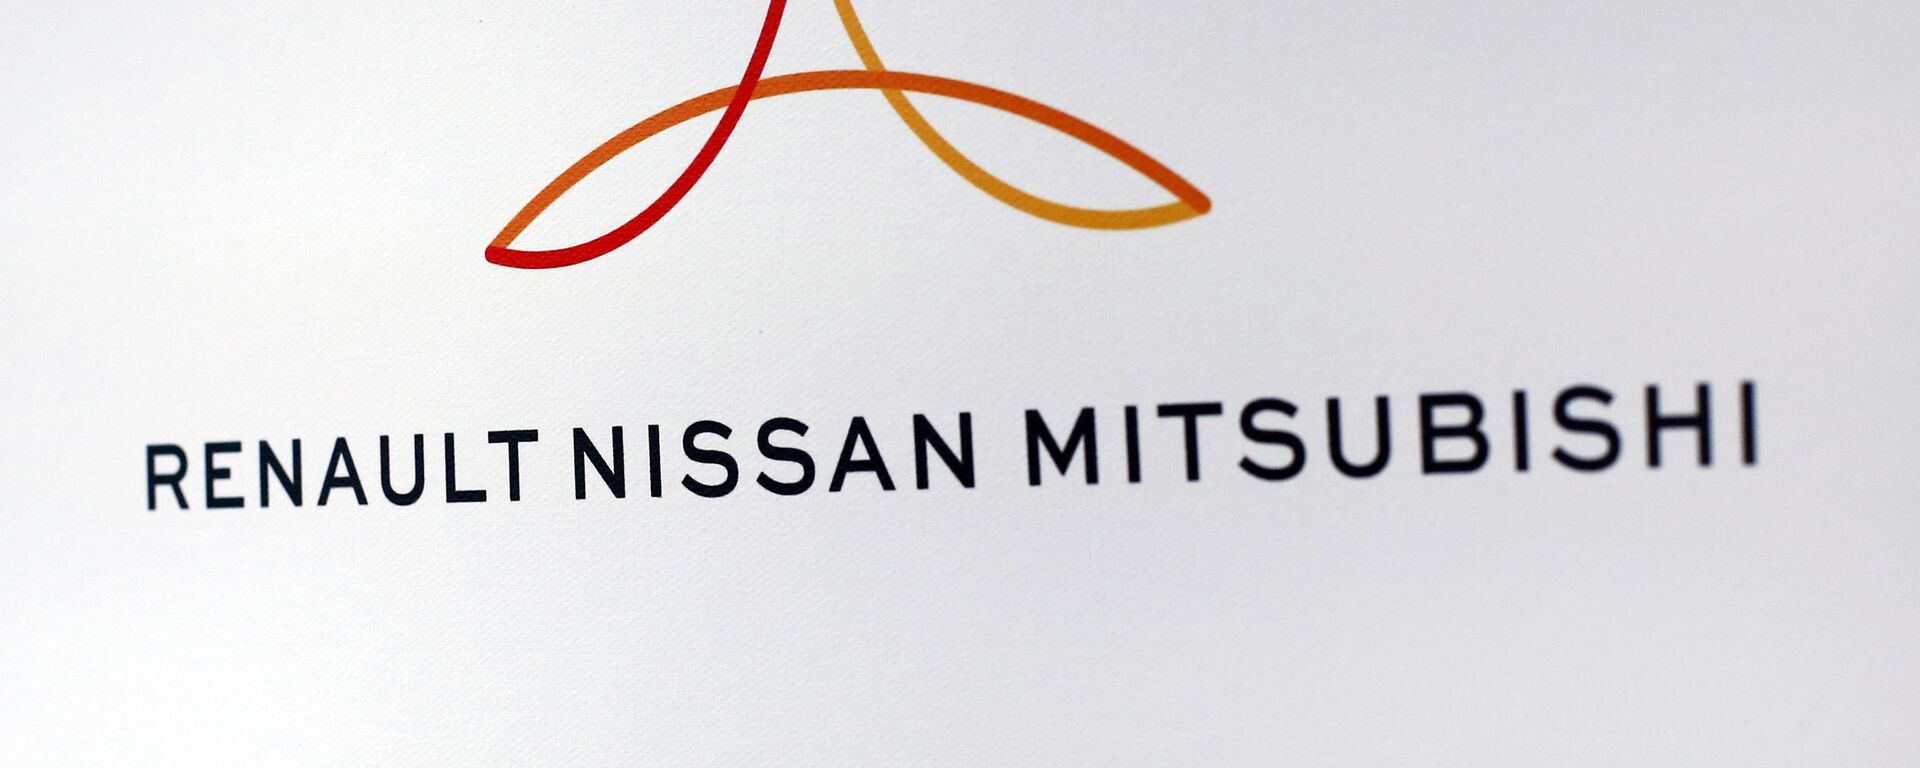  Renault–Nissan–Mitsubishi - Sputnik 日本, 1920, 05.05.2021